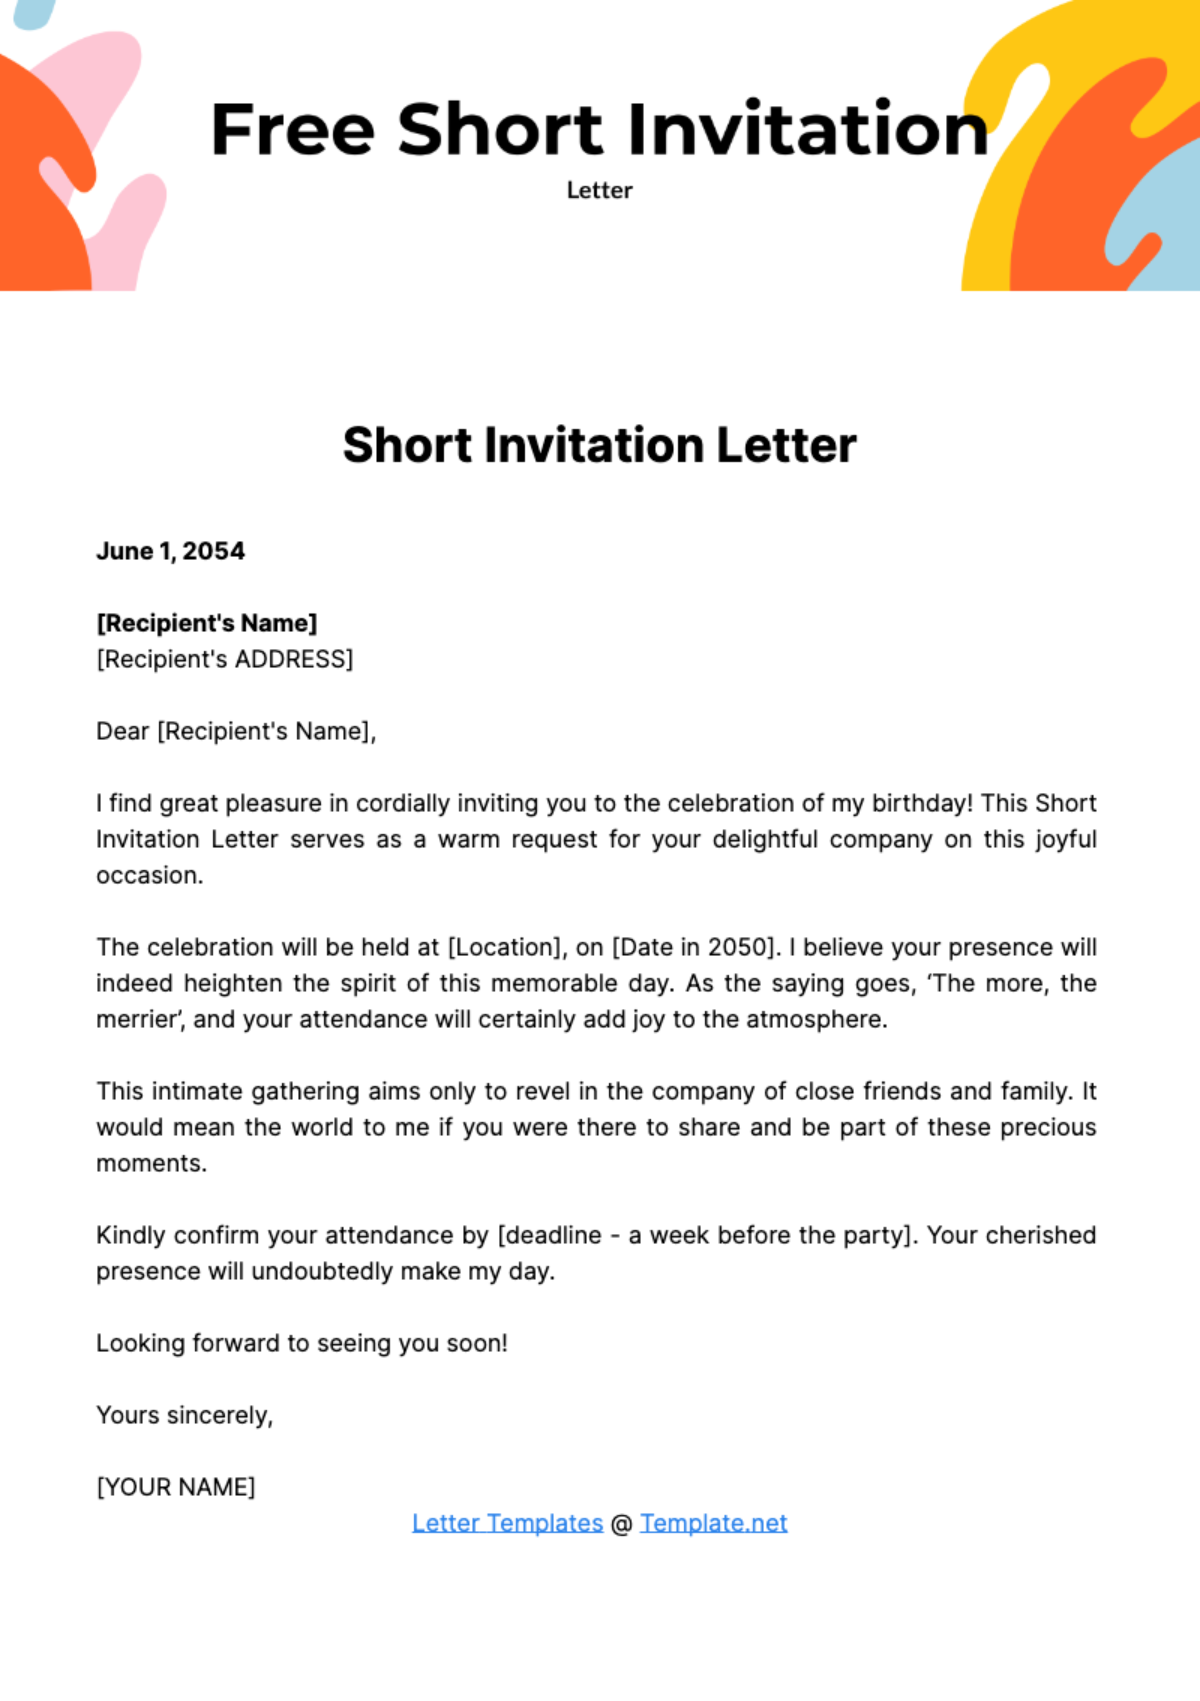 Free Short Invitation Letter Template